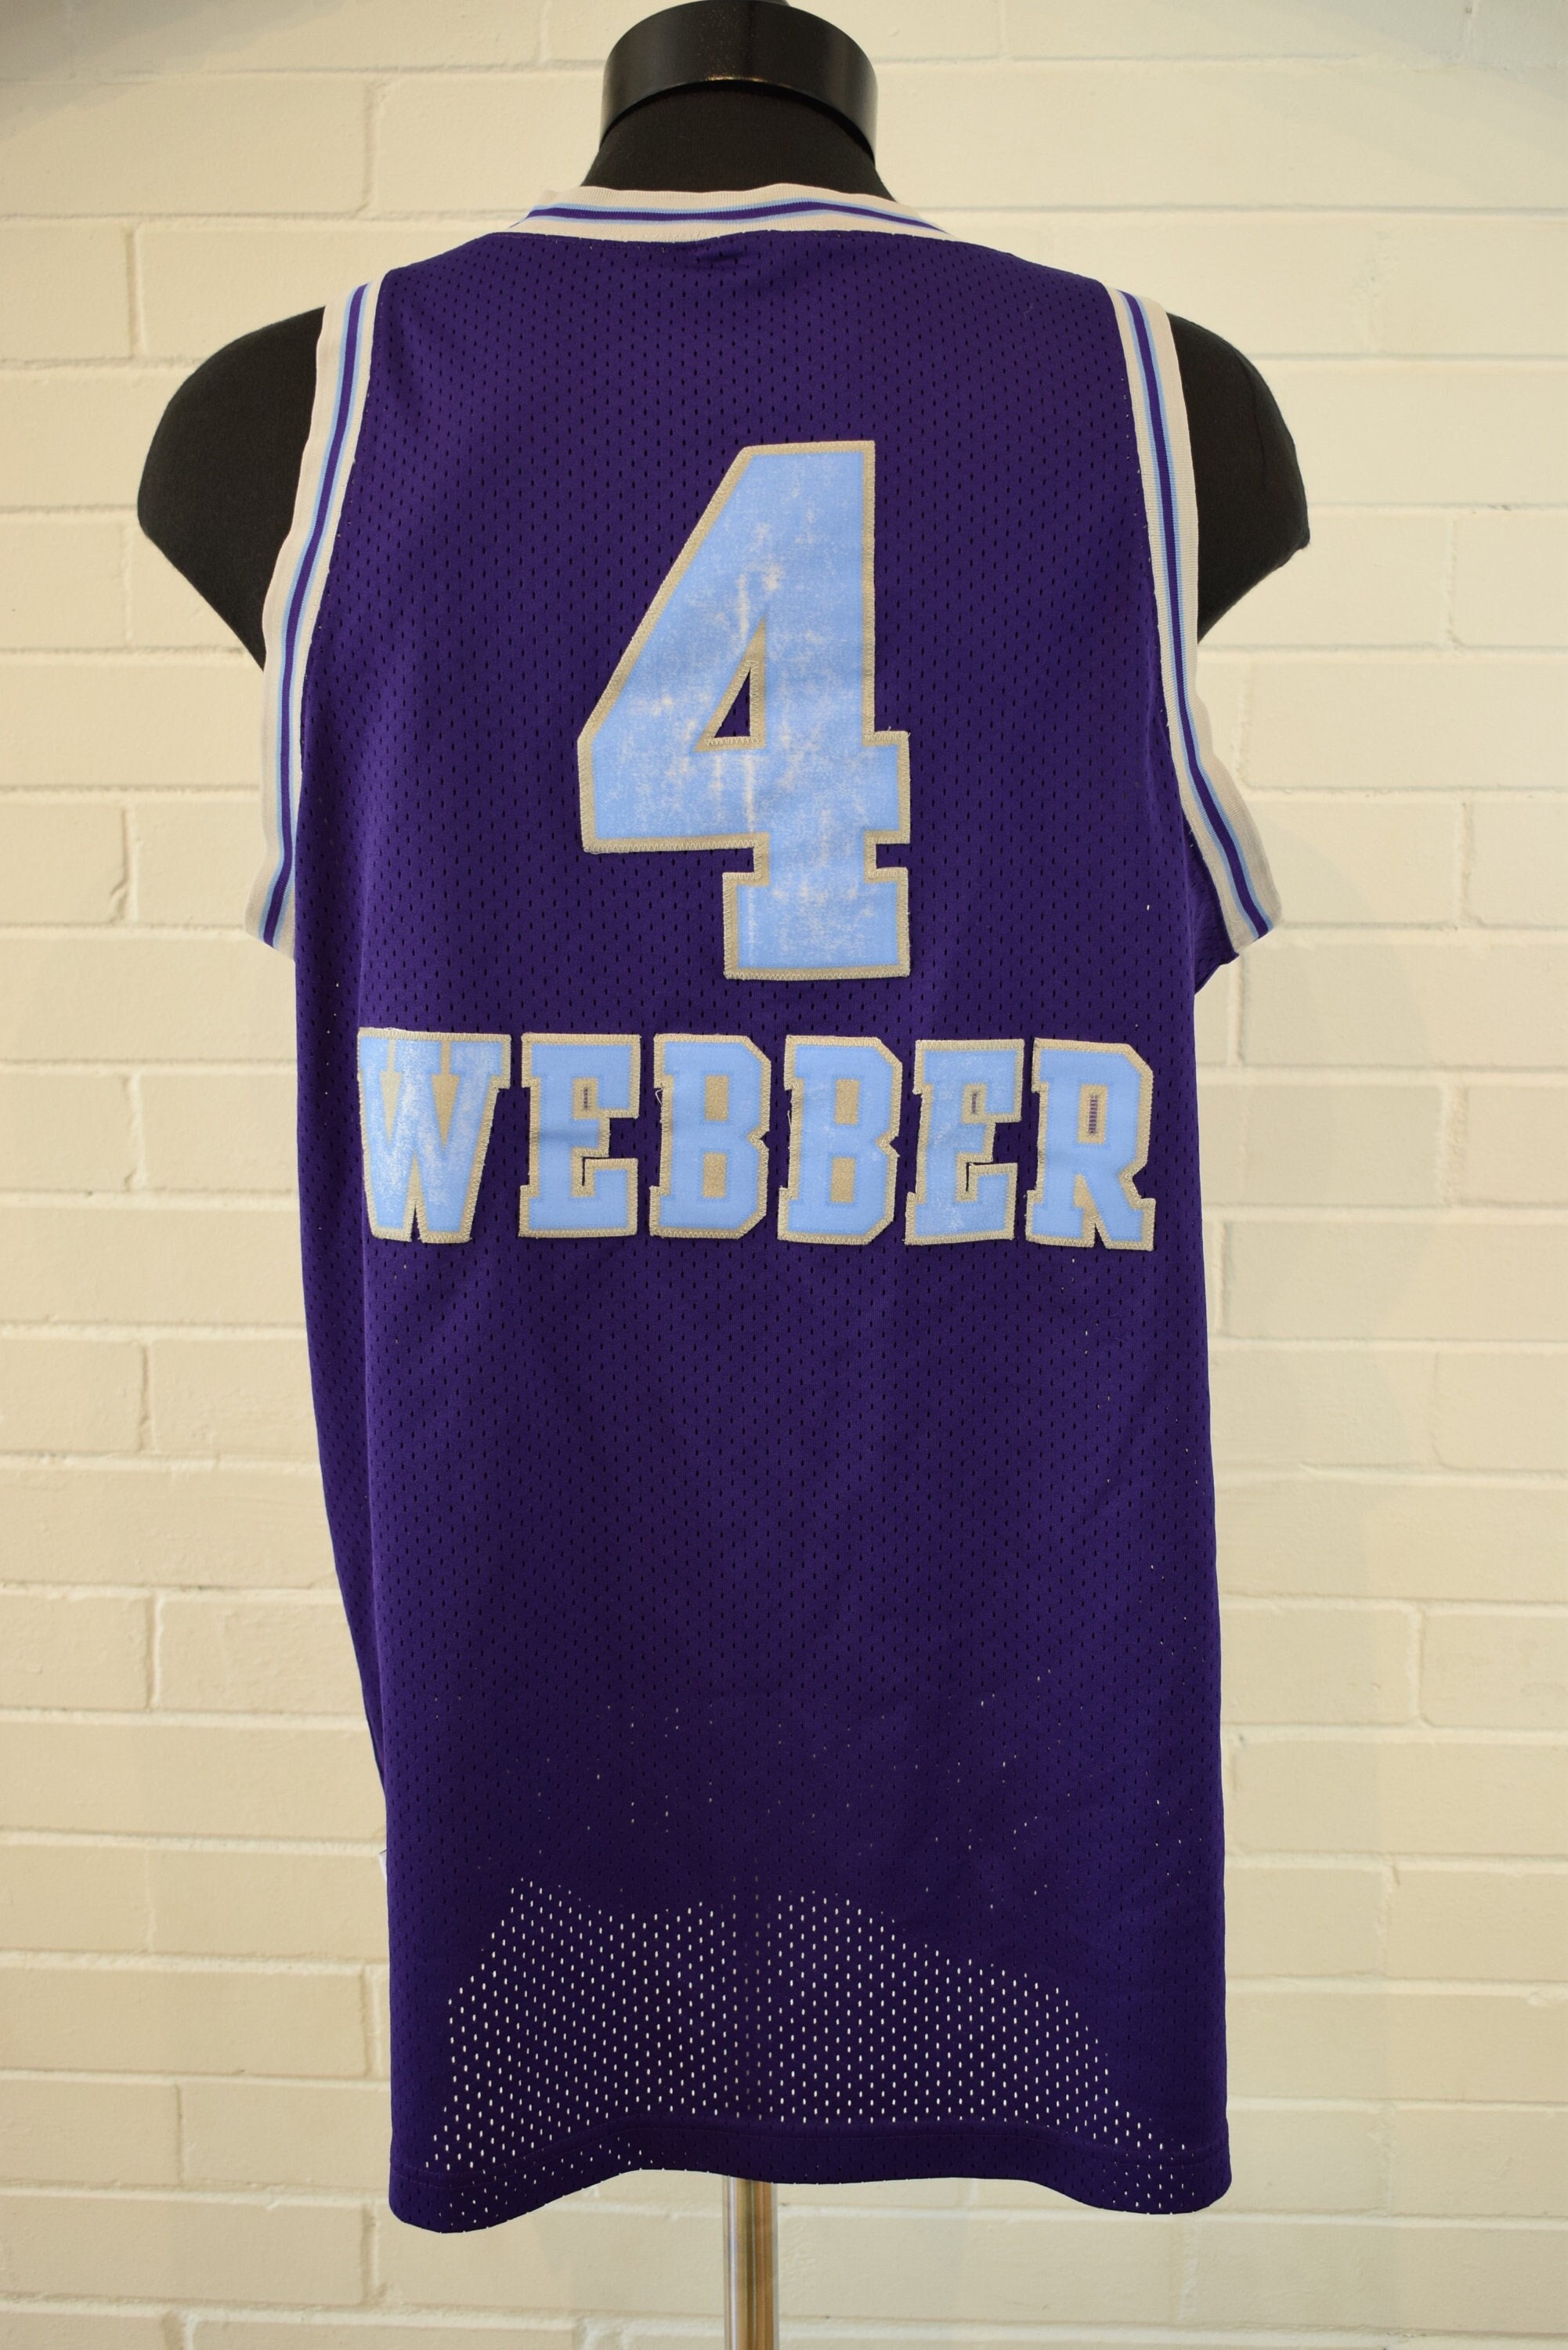 Vintage Nike Team NBA Sacramento Kings Chris Webber Purple Jersey